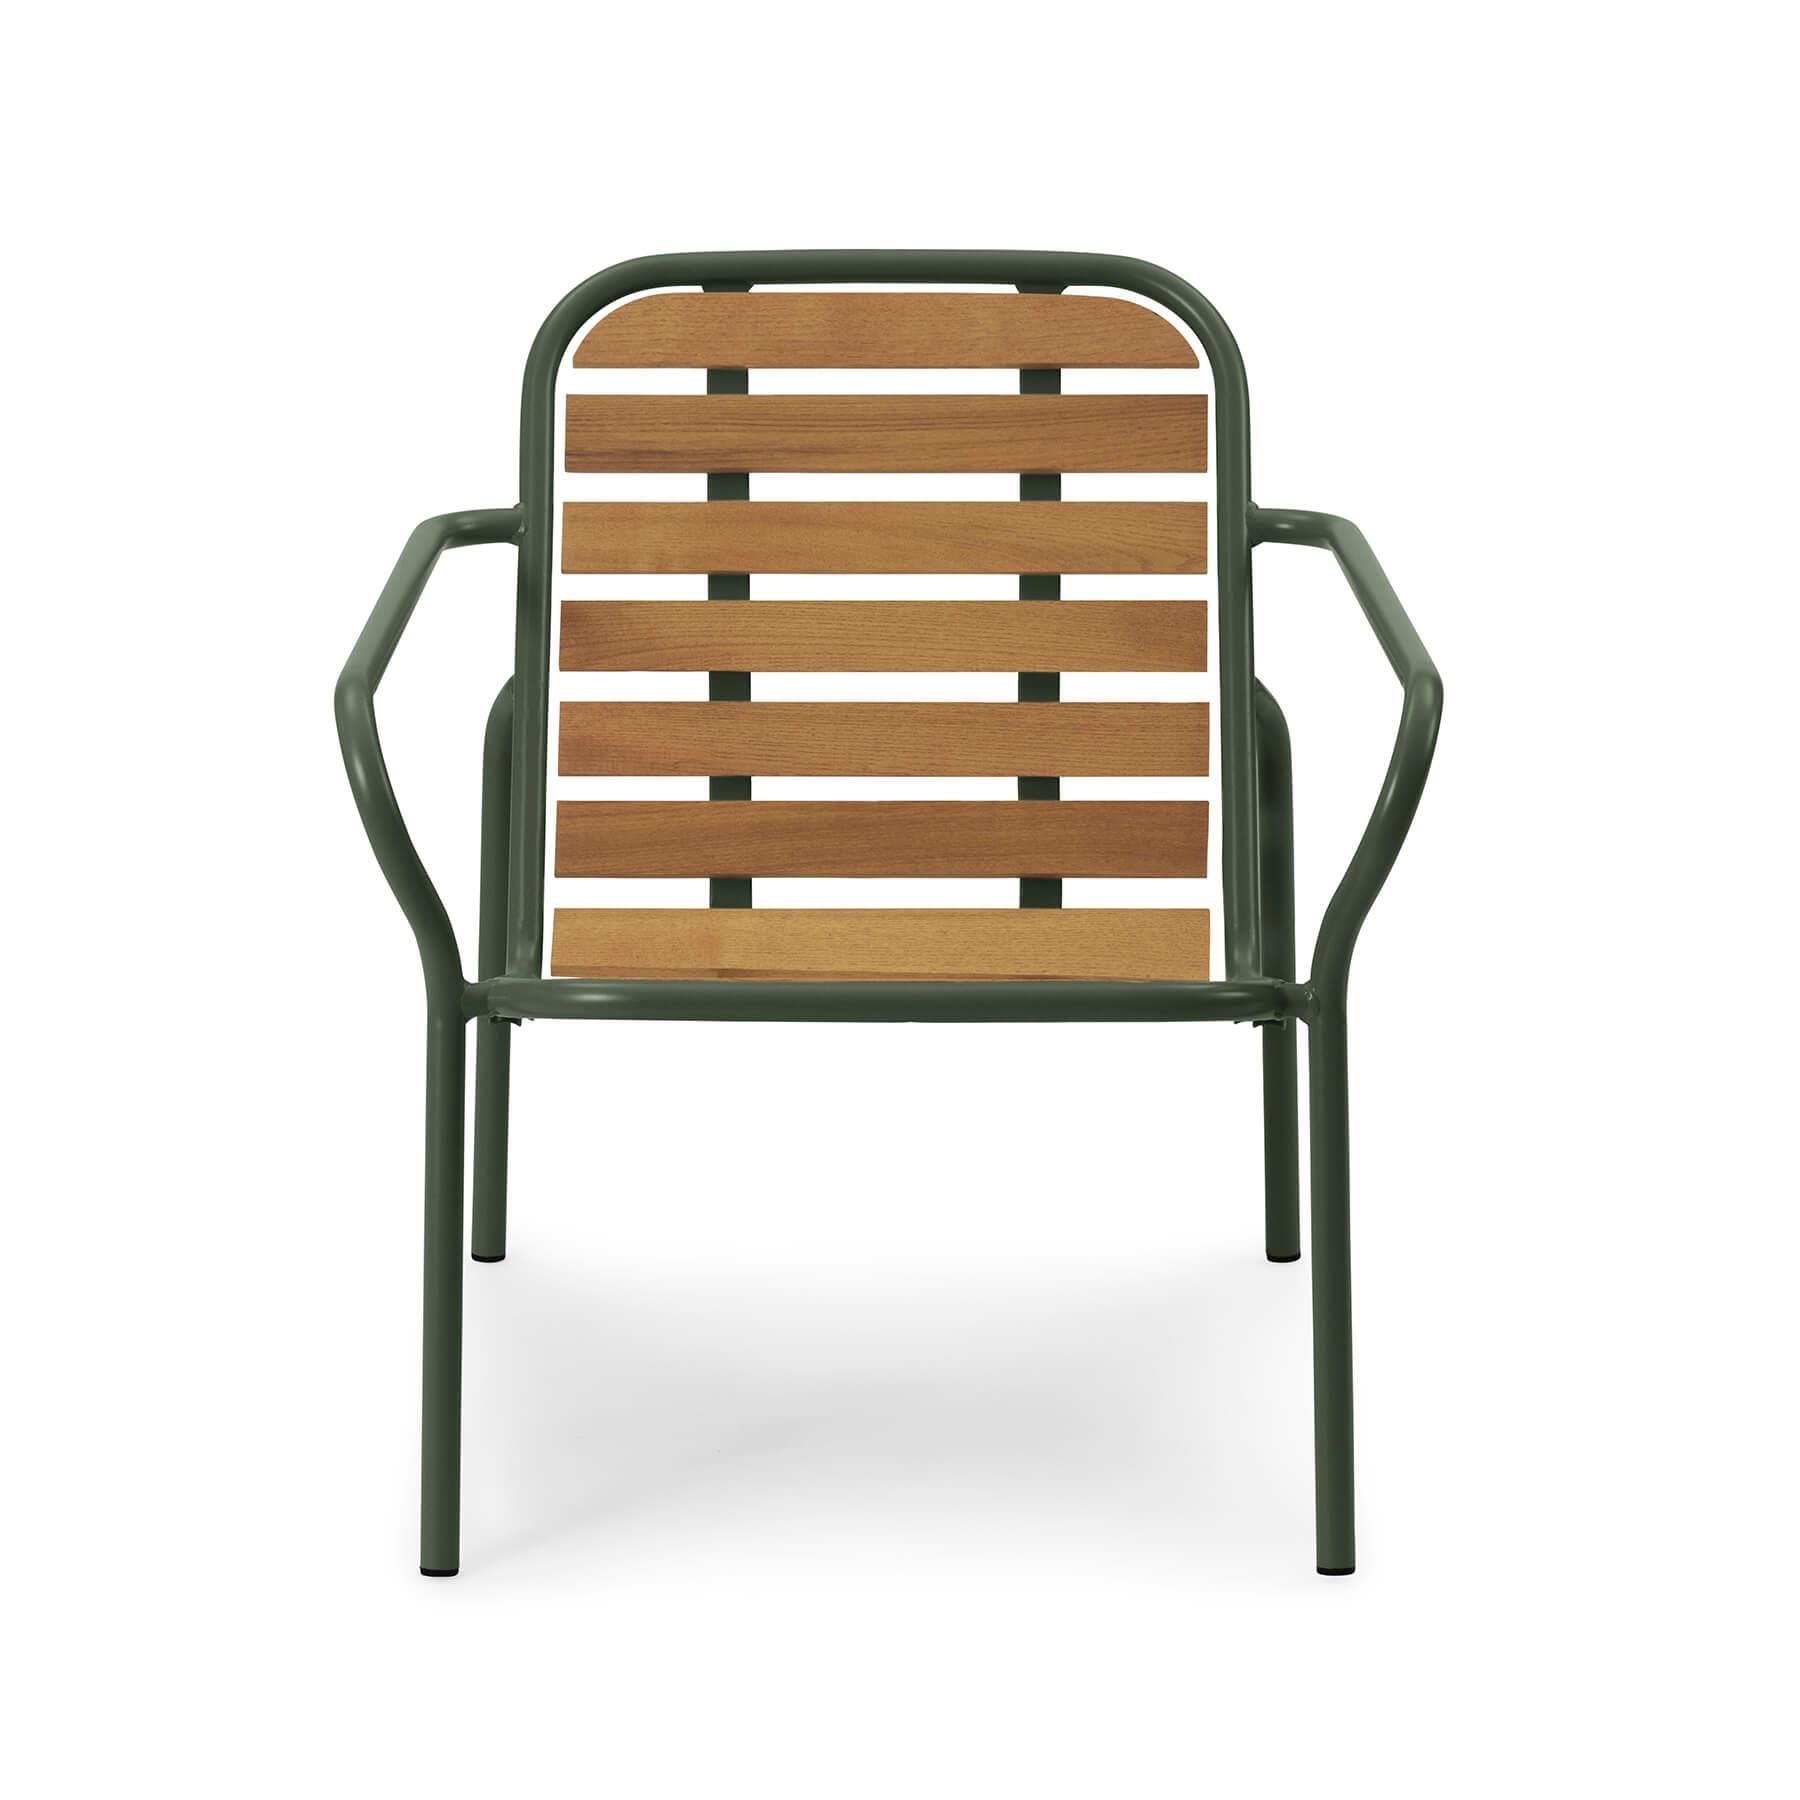 Normann Copenhagen Vig Wooden Garden Lounge Chair Green Designer Furniture From Holloways Of Ludlow